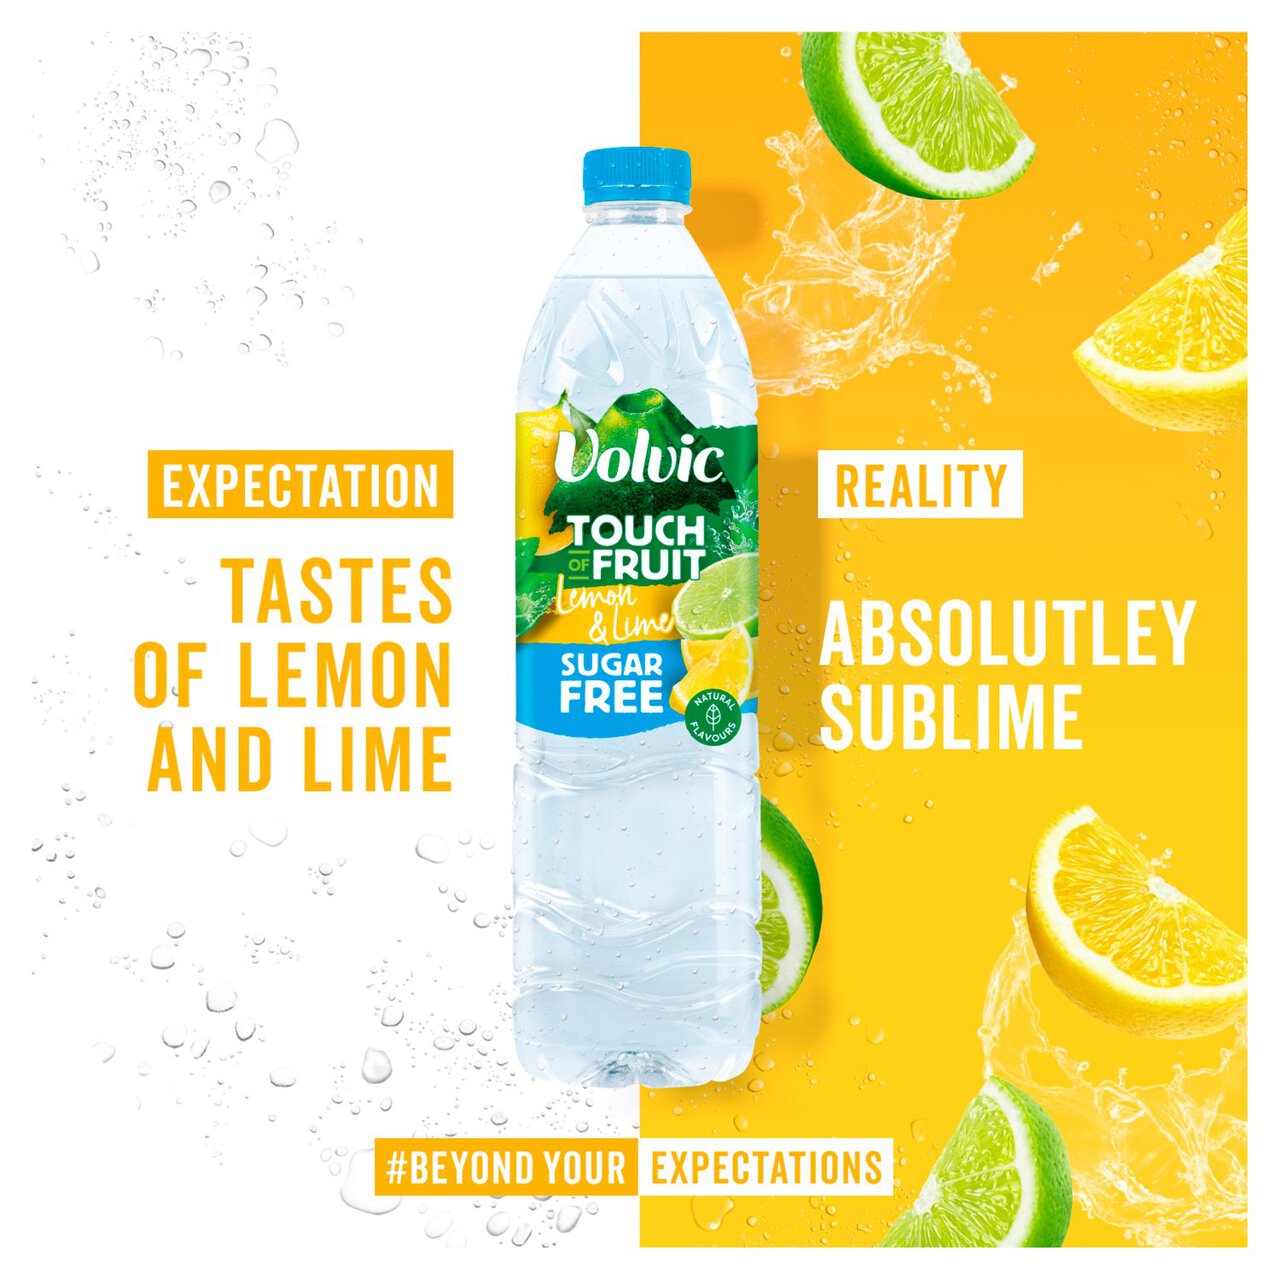 Volvic Sugar Free Touch of Fruit Lemon & Lime 1.5l